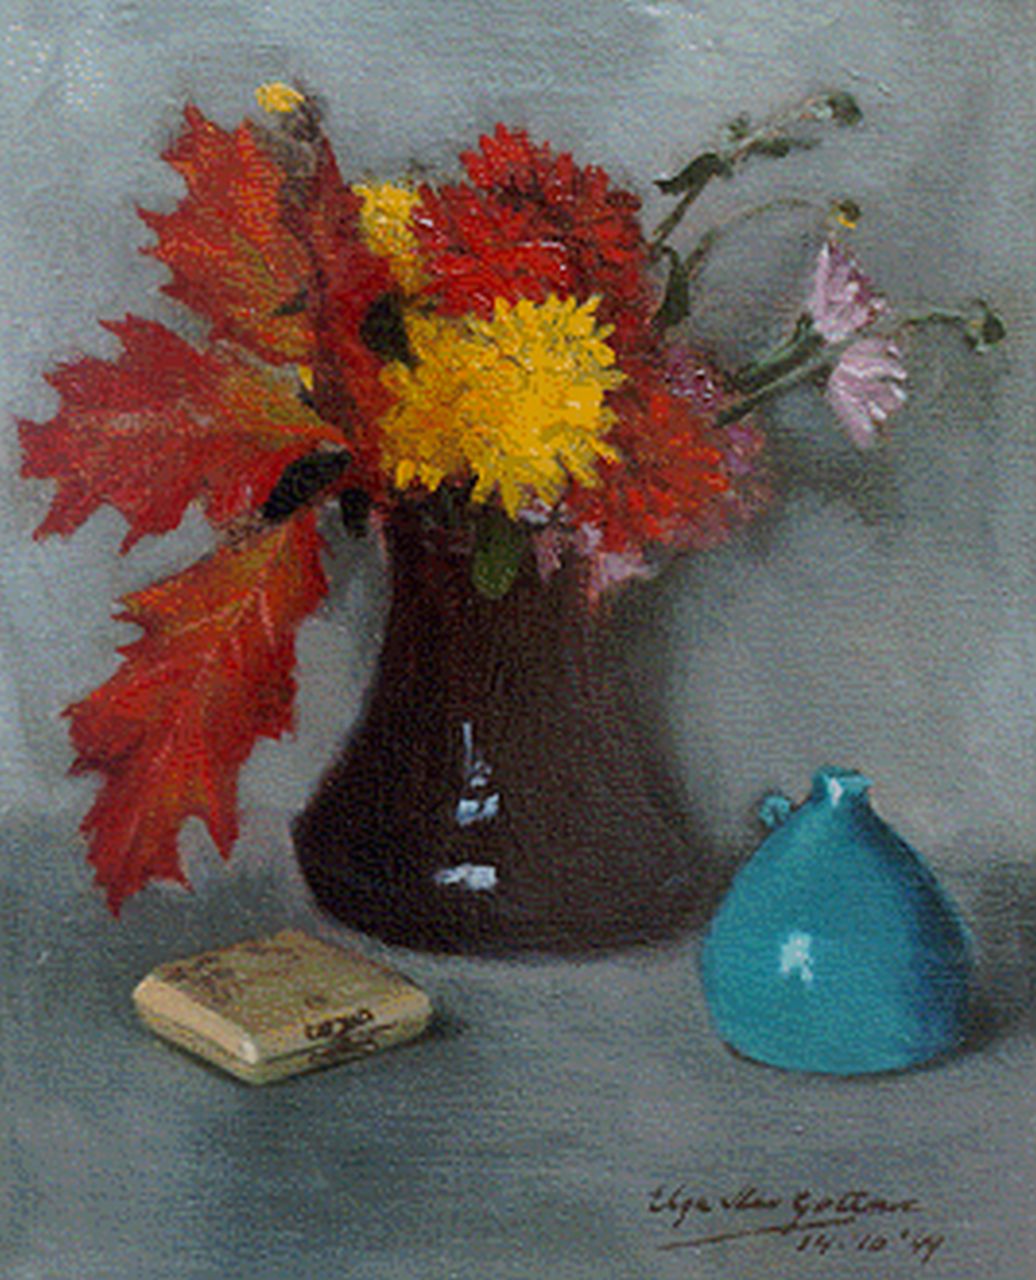 Gottnic E.S. von | Elga von Gottnic, A colourful Bouquet, oil on canvas 30.0 x 24.3 cm, signed l.r. and dated '49